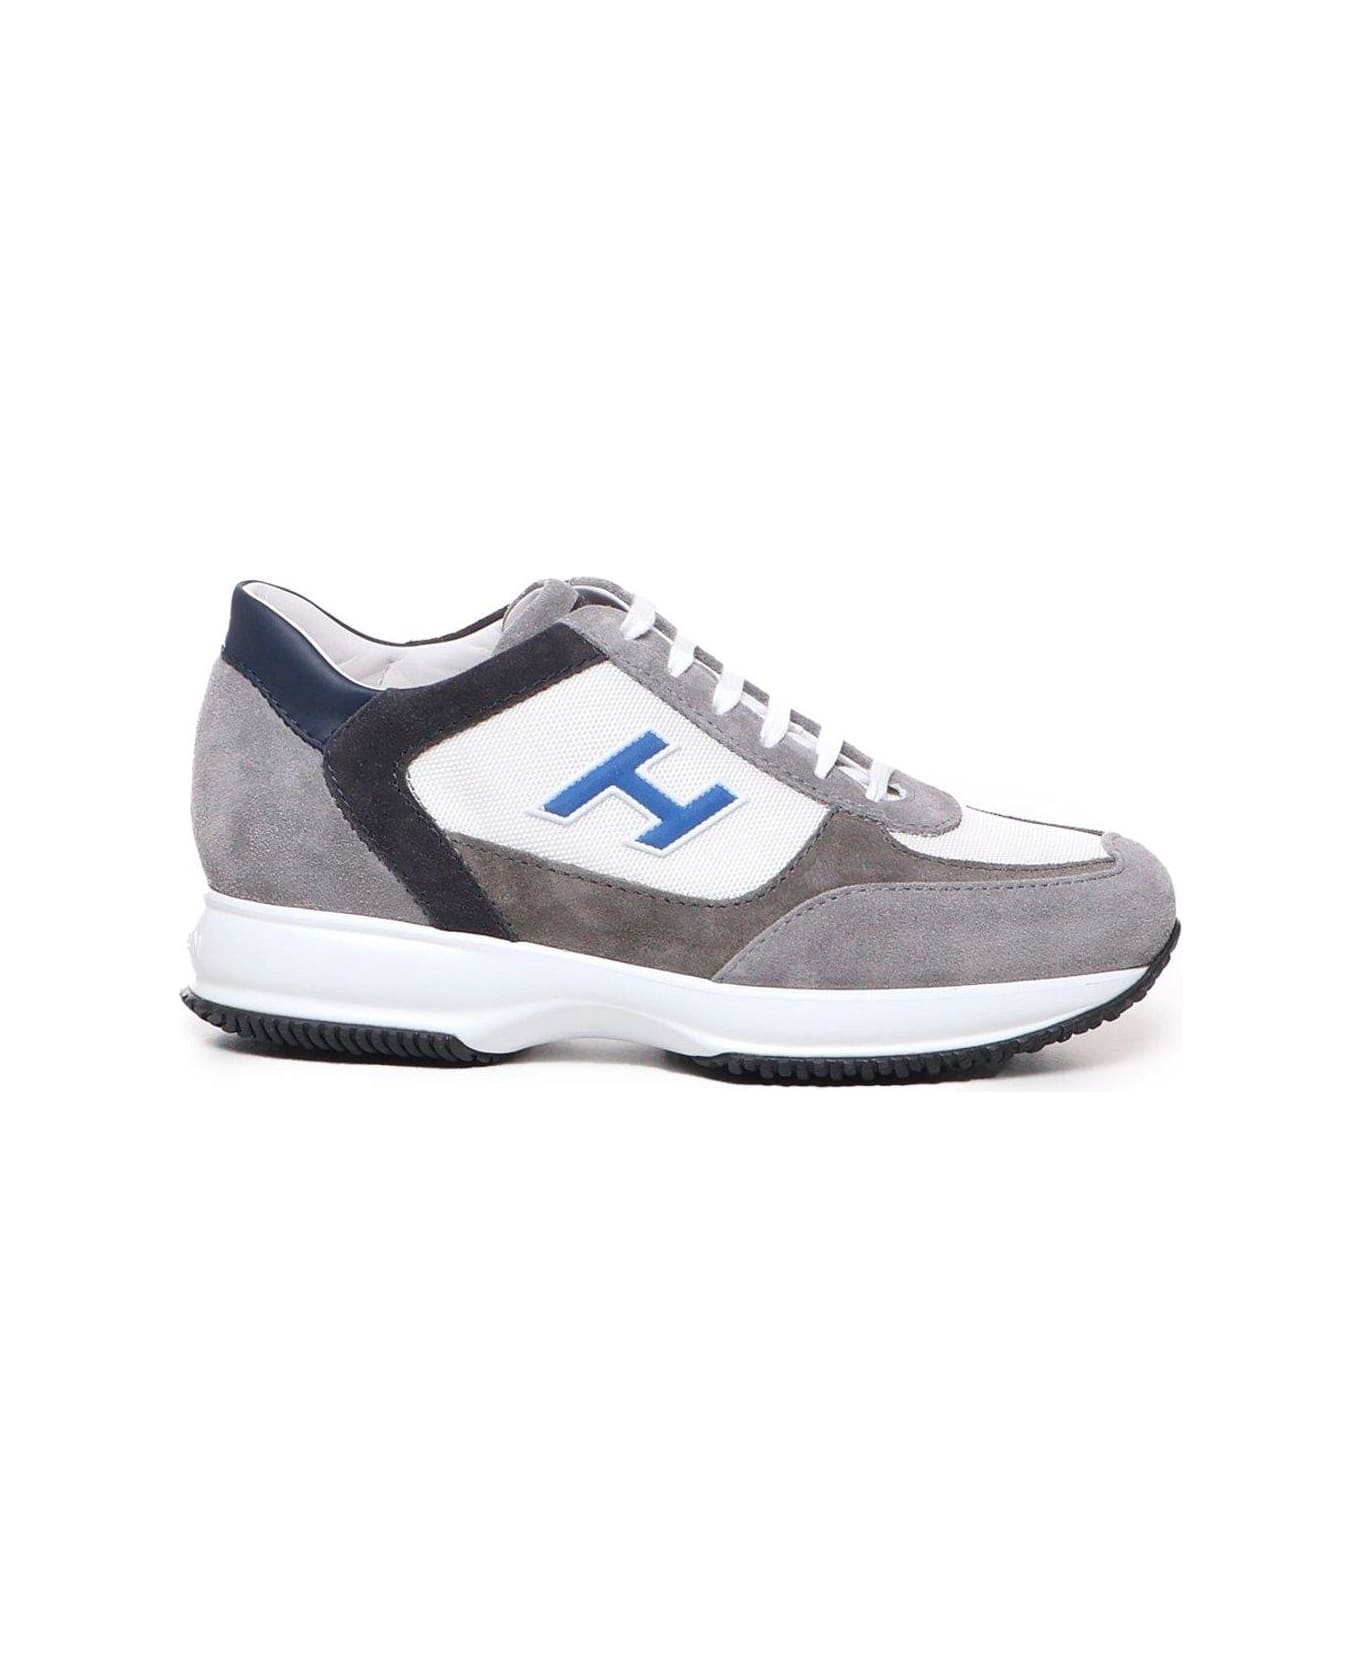 Hogan Interactive Lace-up Sneakers - Grigio/bianco